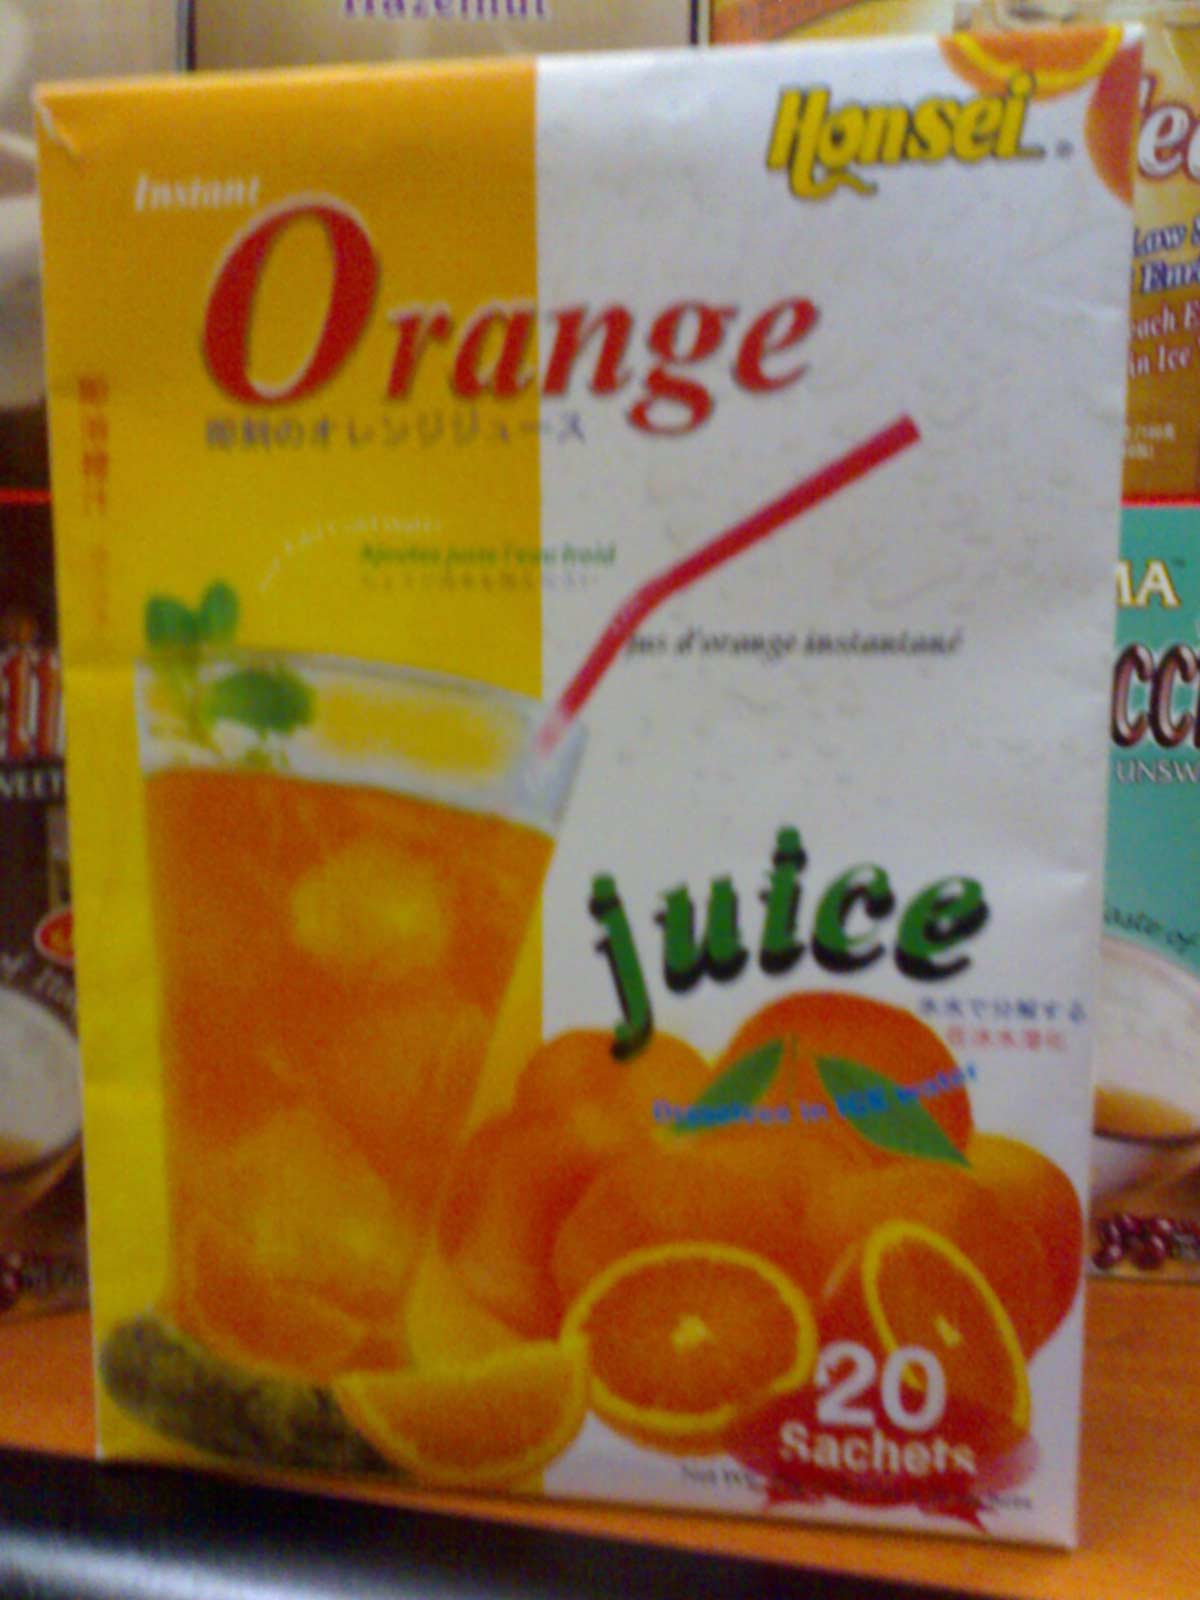 Honsei Orange & Mango Pulver Drink (Honsei Orange & Mango Pulver Drink)